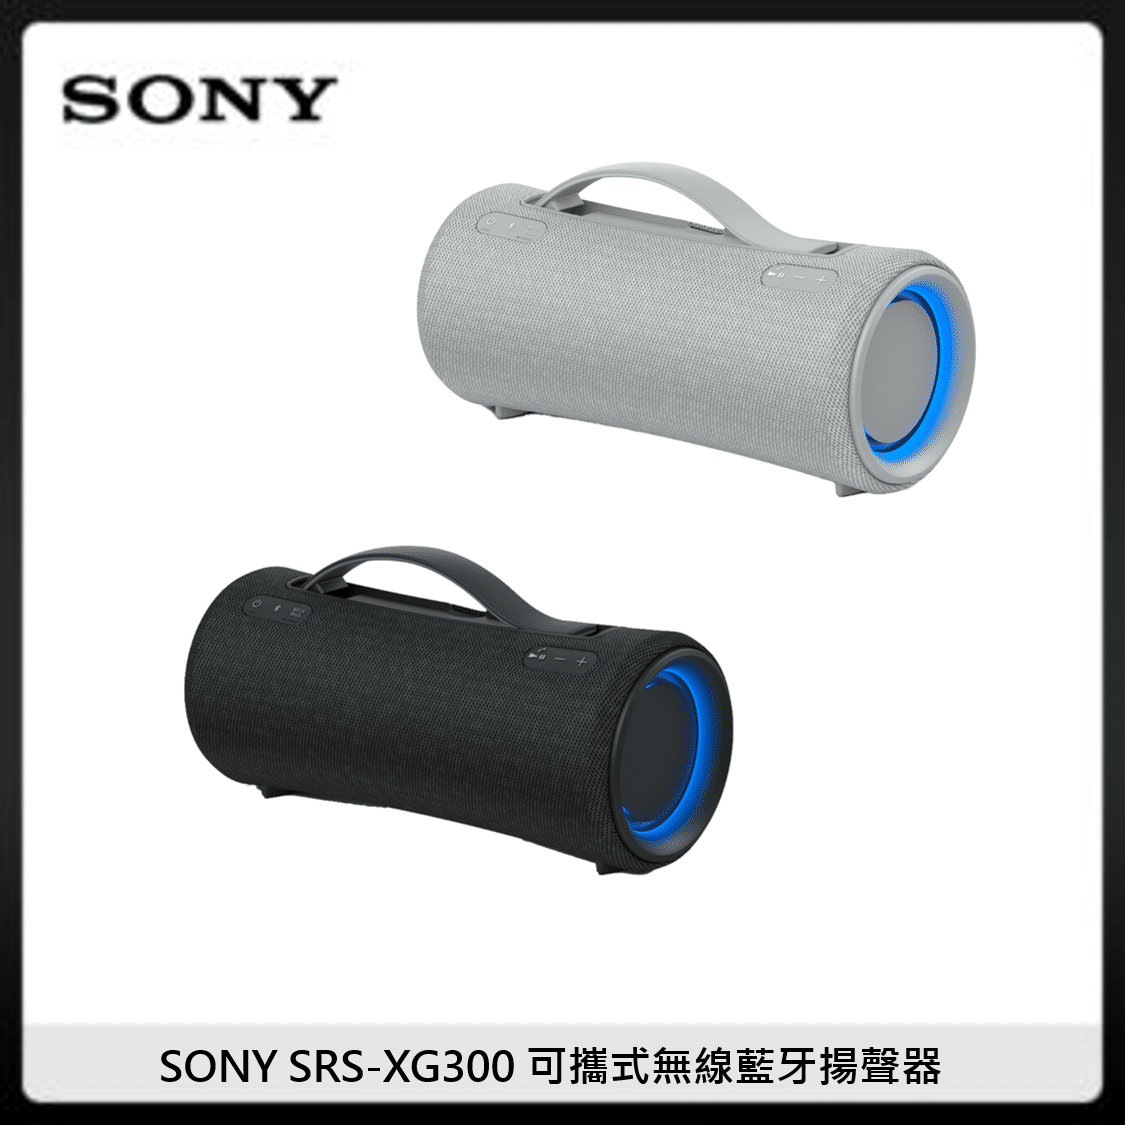 SONY SRS-XG300 可攜式無線藍牙揚聲器(兩色選) | 法雅客網路商店